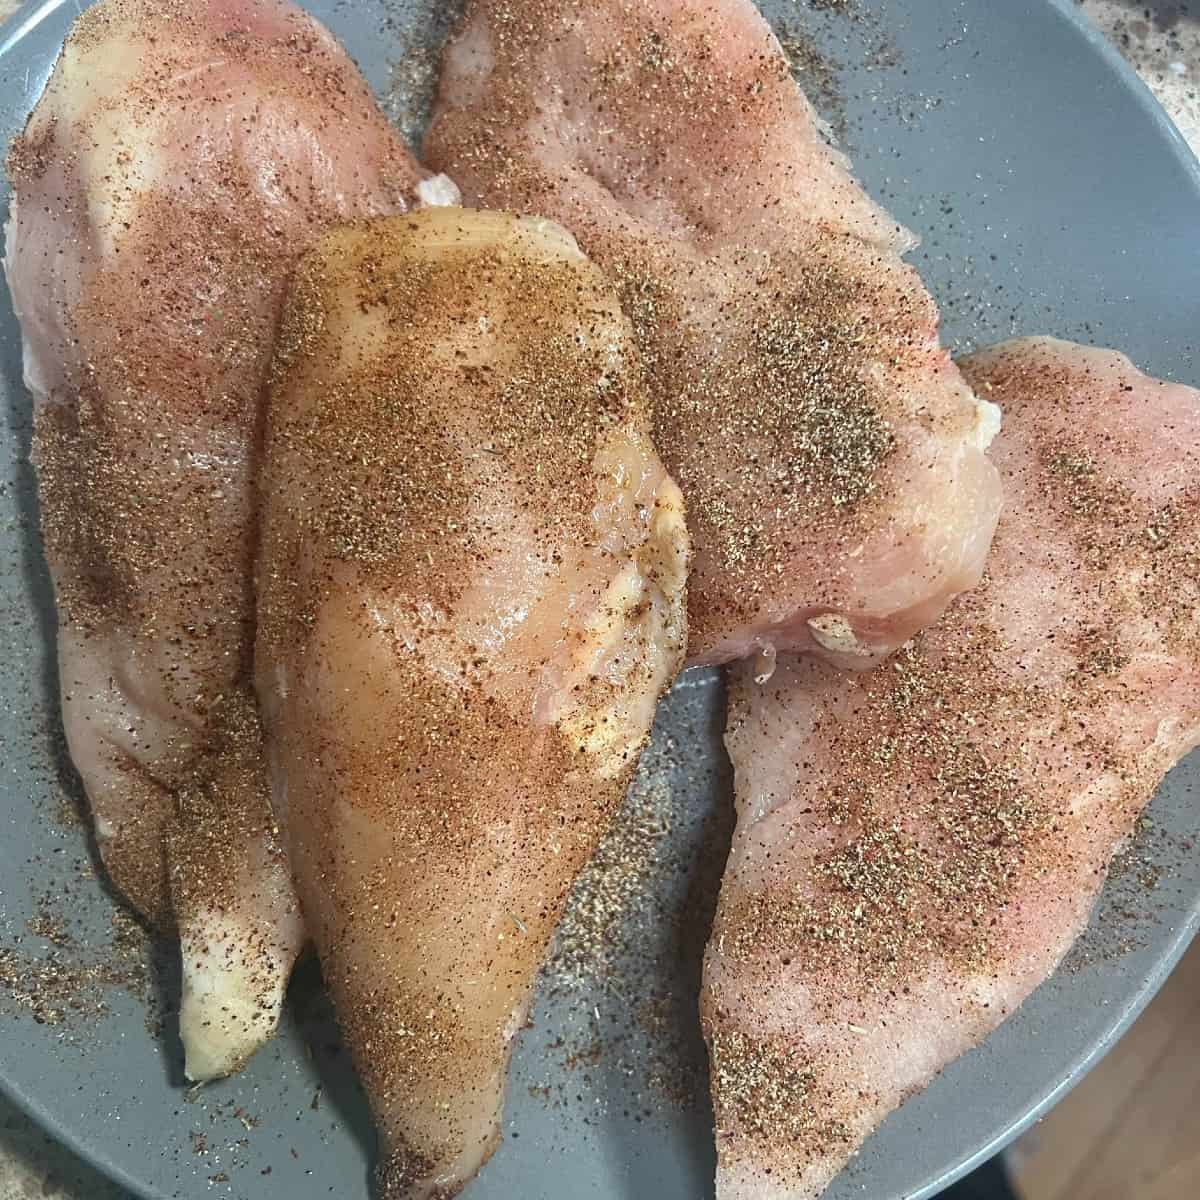 chicken breasts seasoned with cumin, garlic powder and chili powder